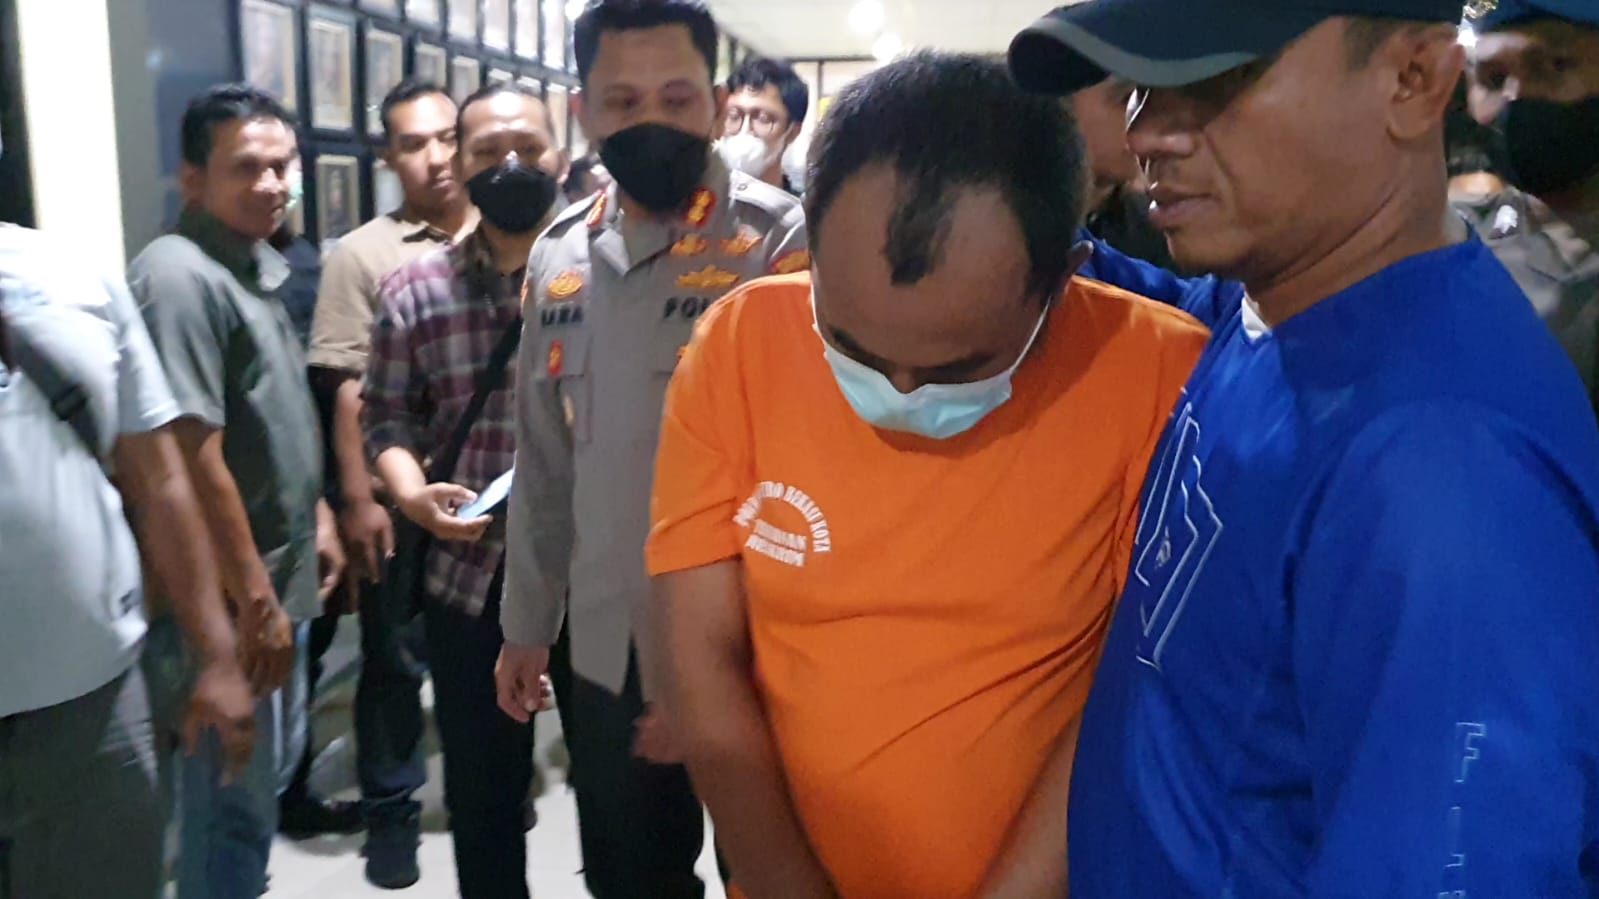 Begini Kronologis Pembunuhan Pemilik Toko di Rawalumbu Kota Bekasi